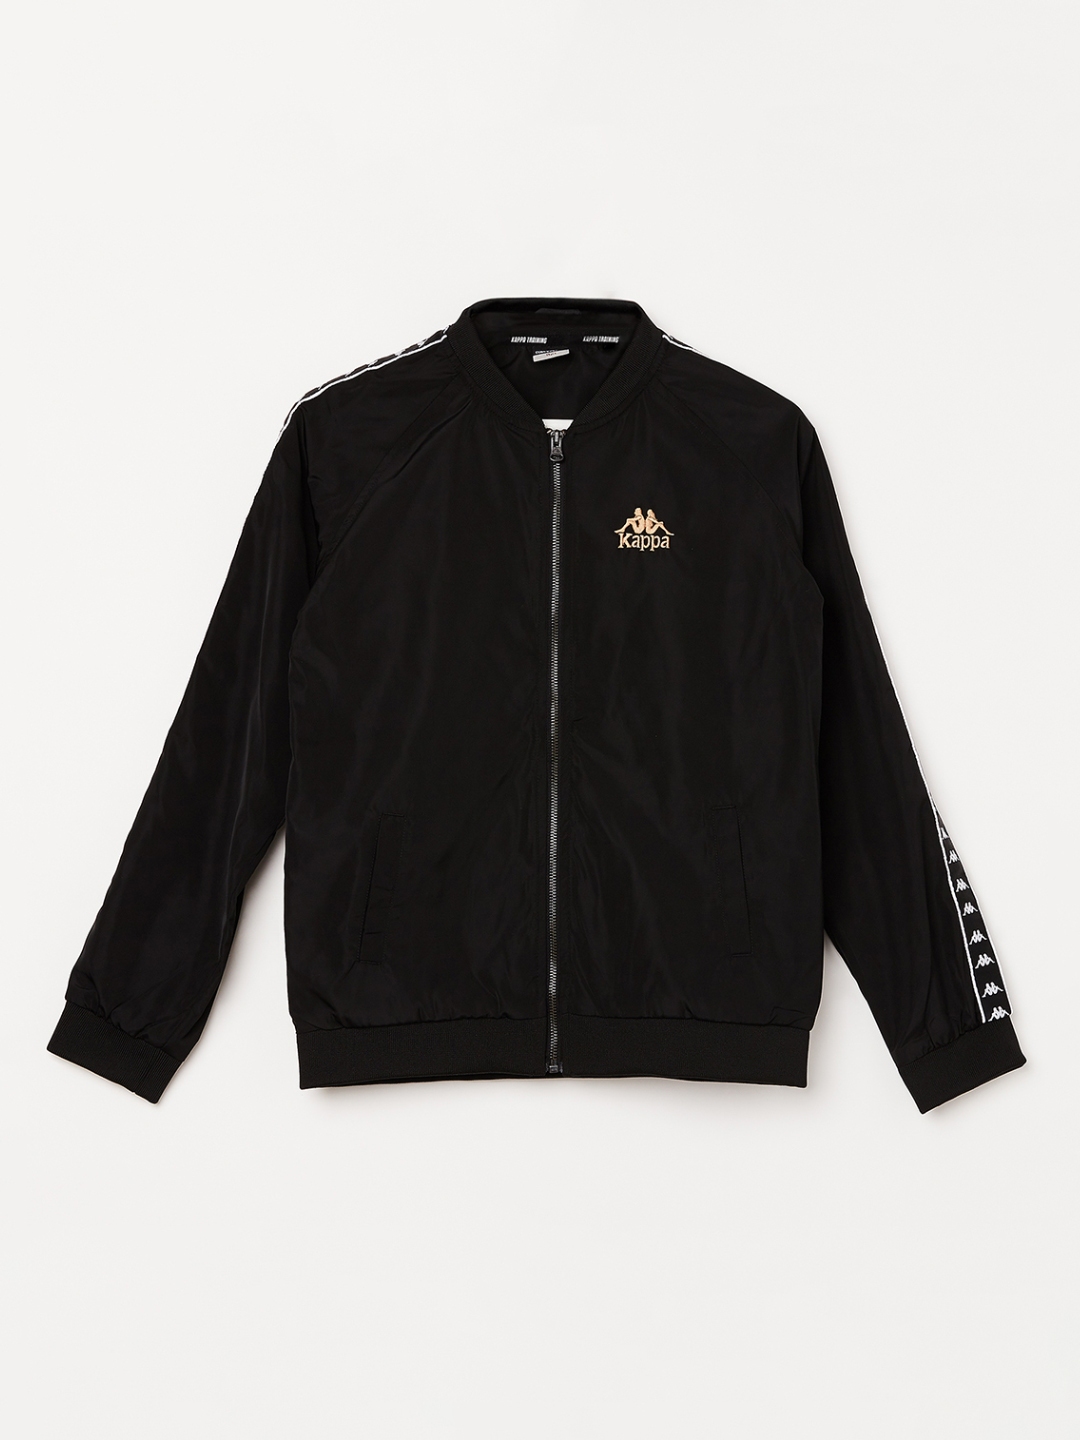 Buy Kappa Boys Black Solid Jacket - Jackets for Boys 10705800 | Myntra